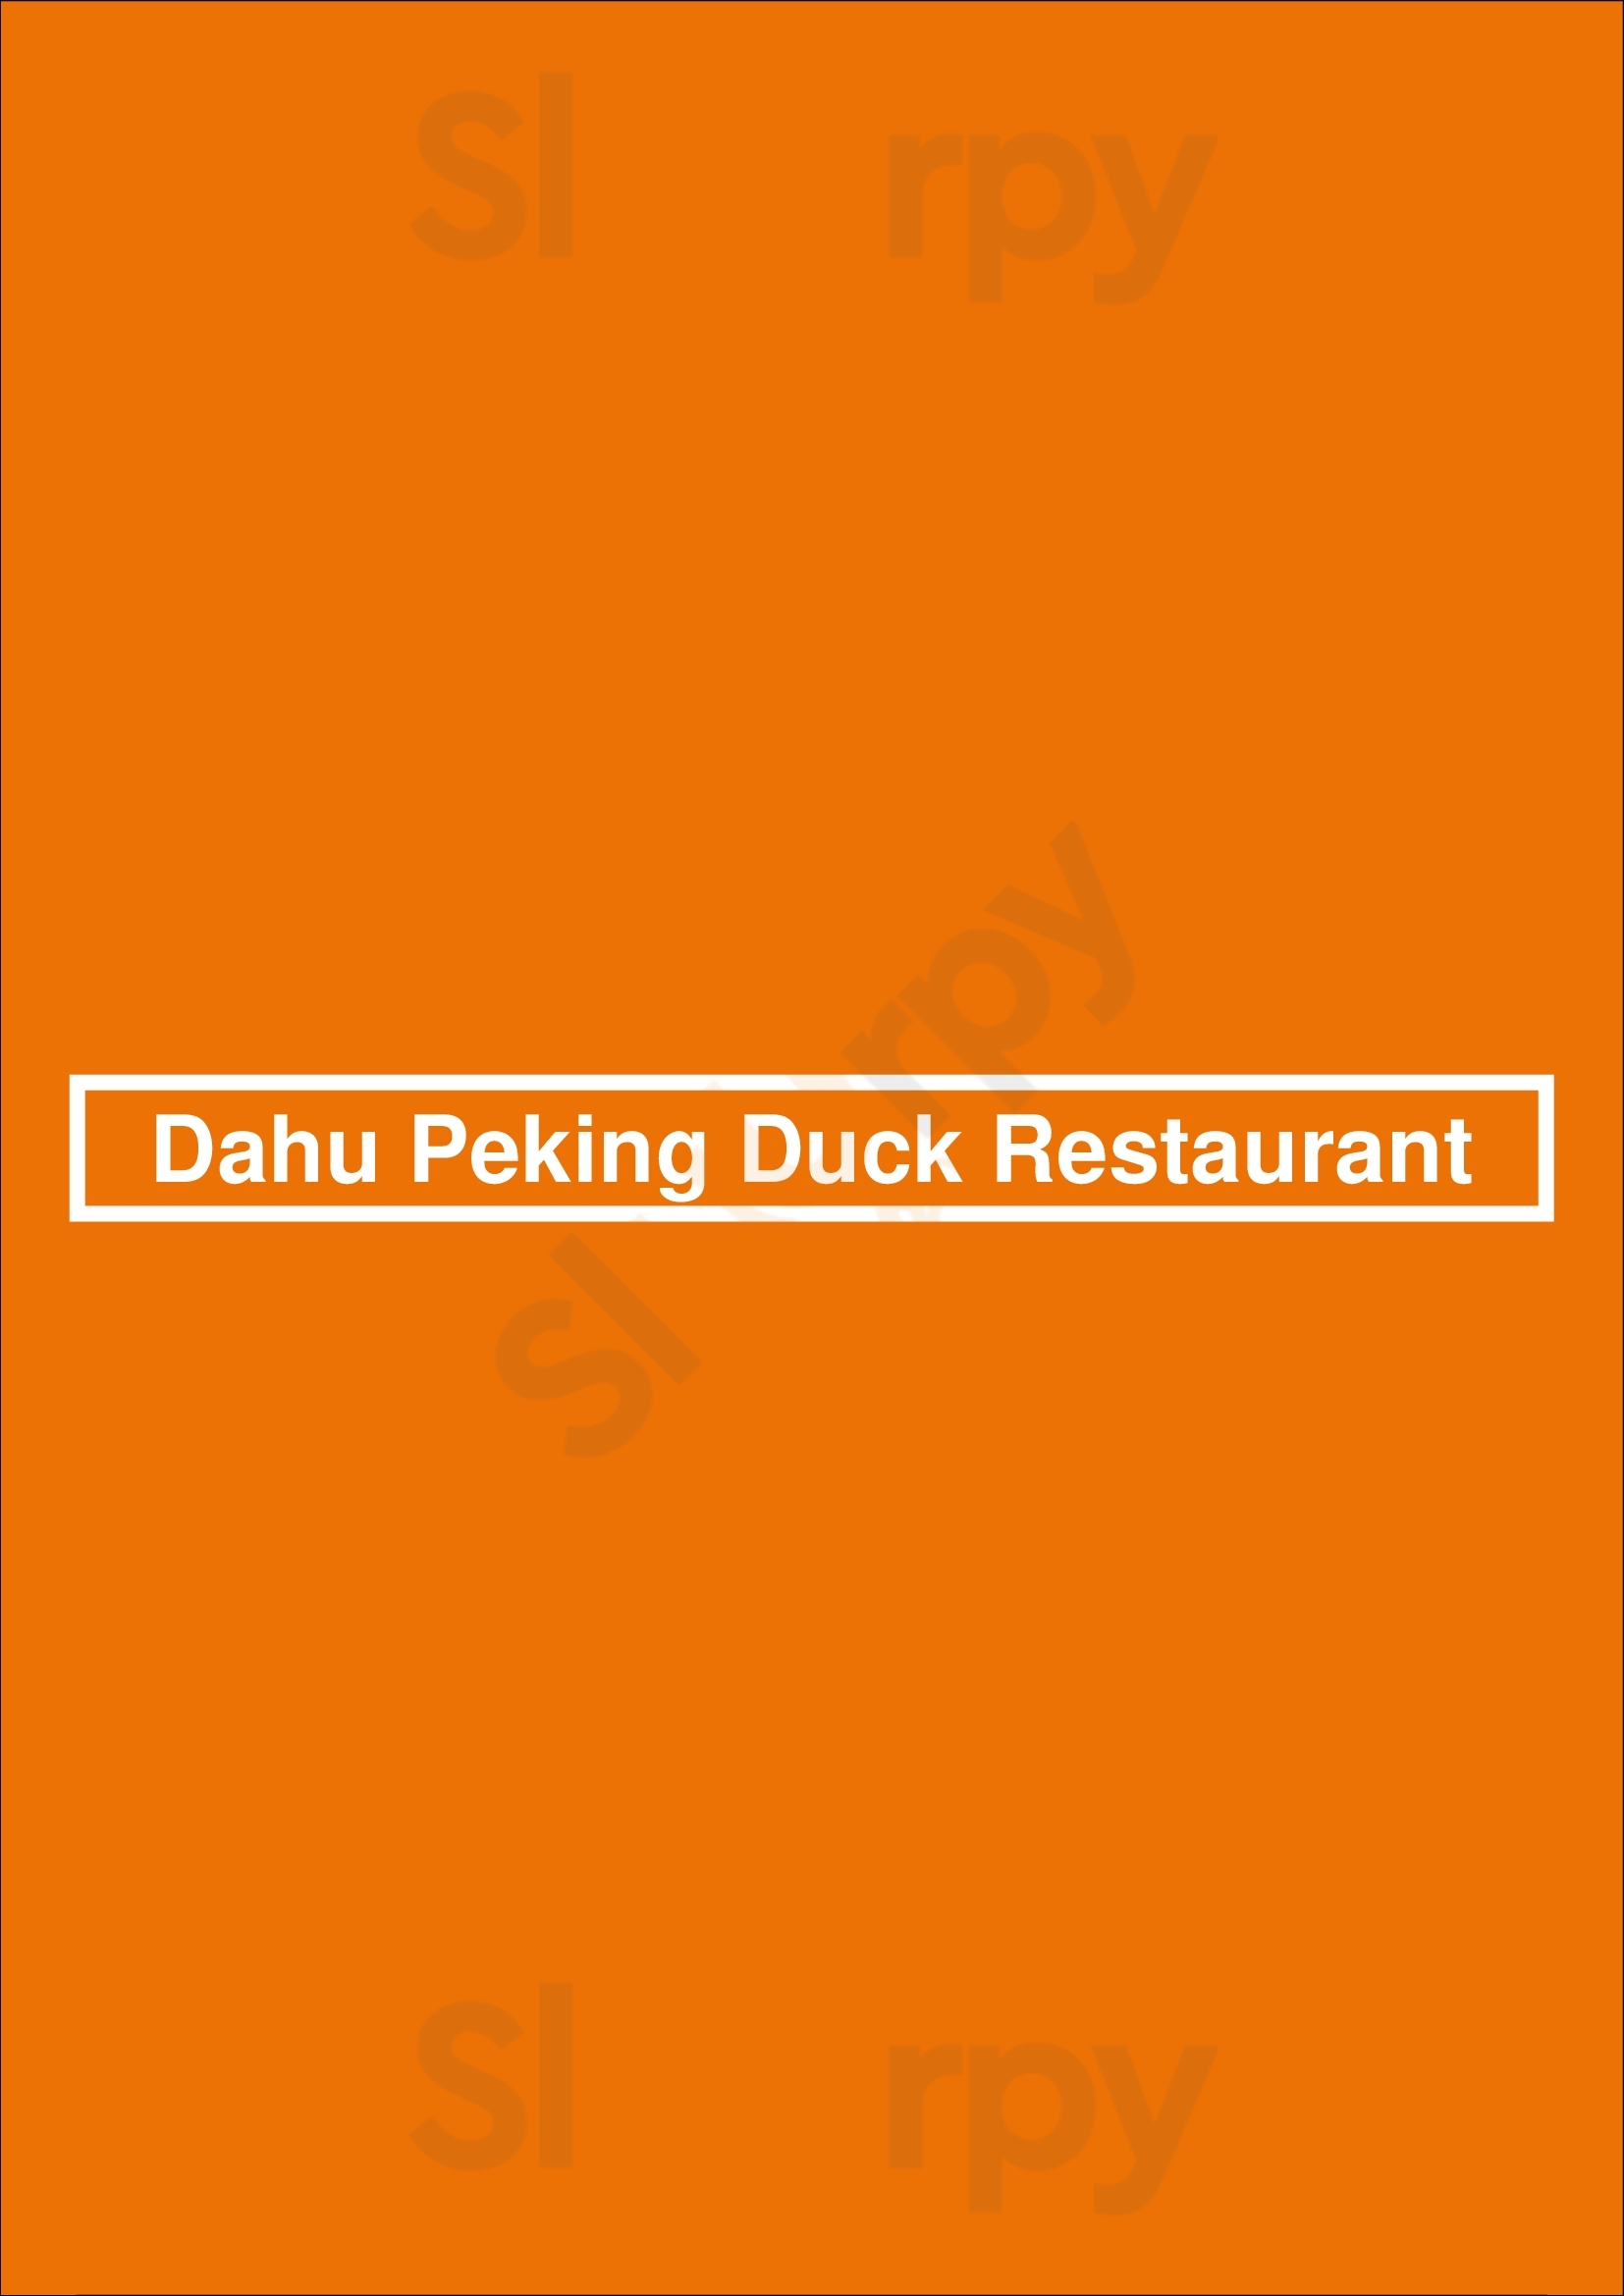 Dahu Peking Duck Restaurant Melbourne Menu - 1